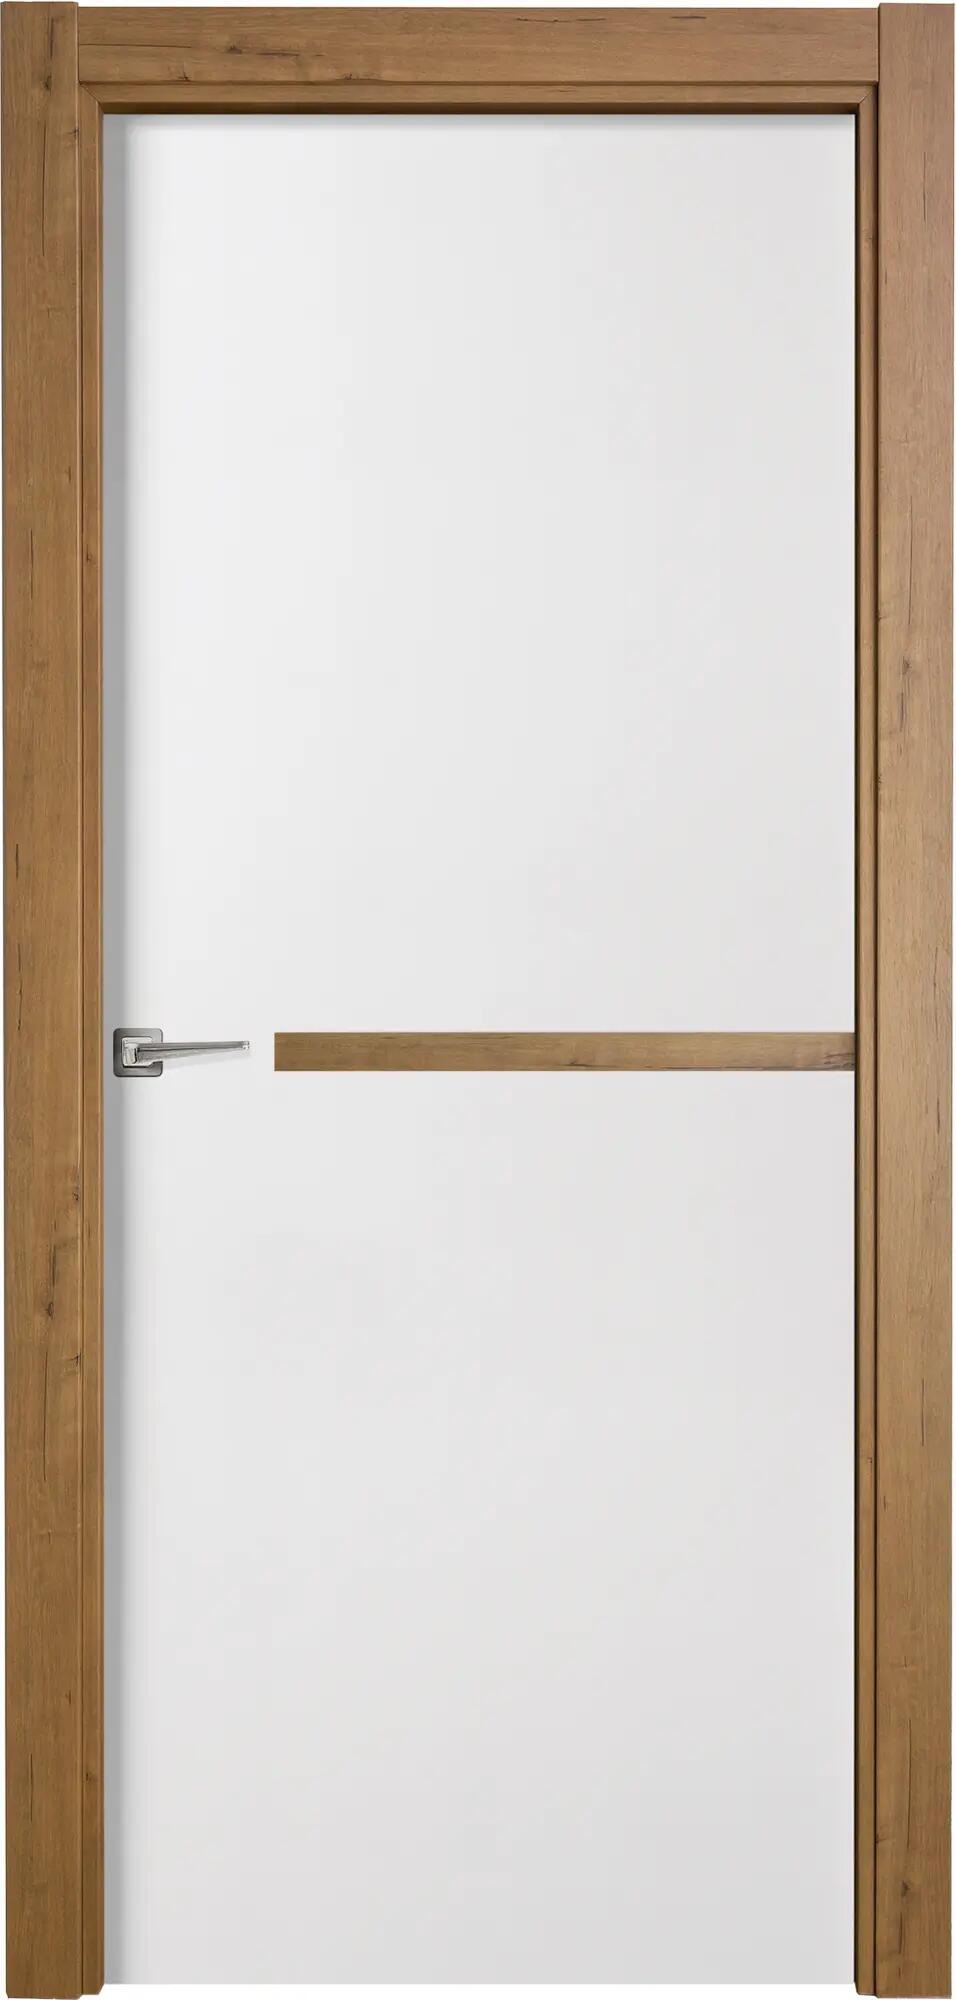 Puerta denver c-gold blanco apertura izquierda de 9x92,5cm